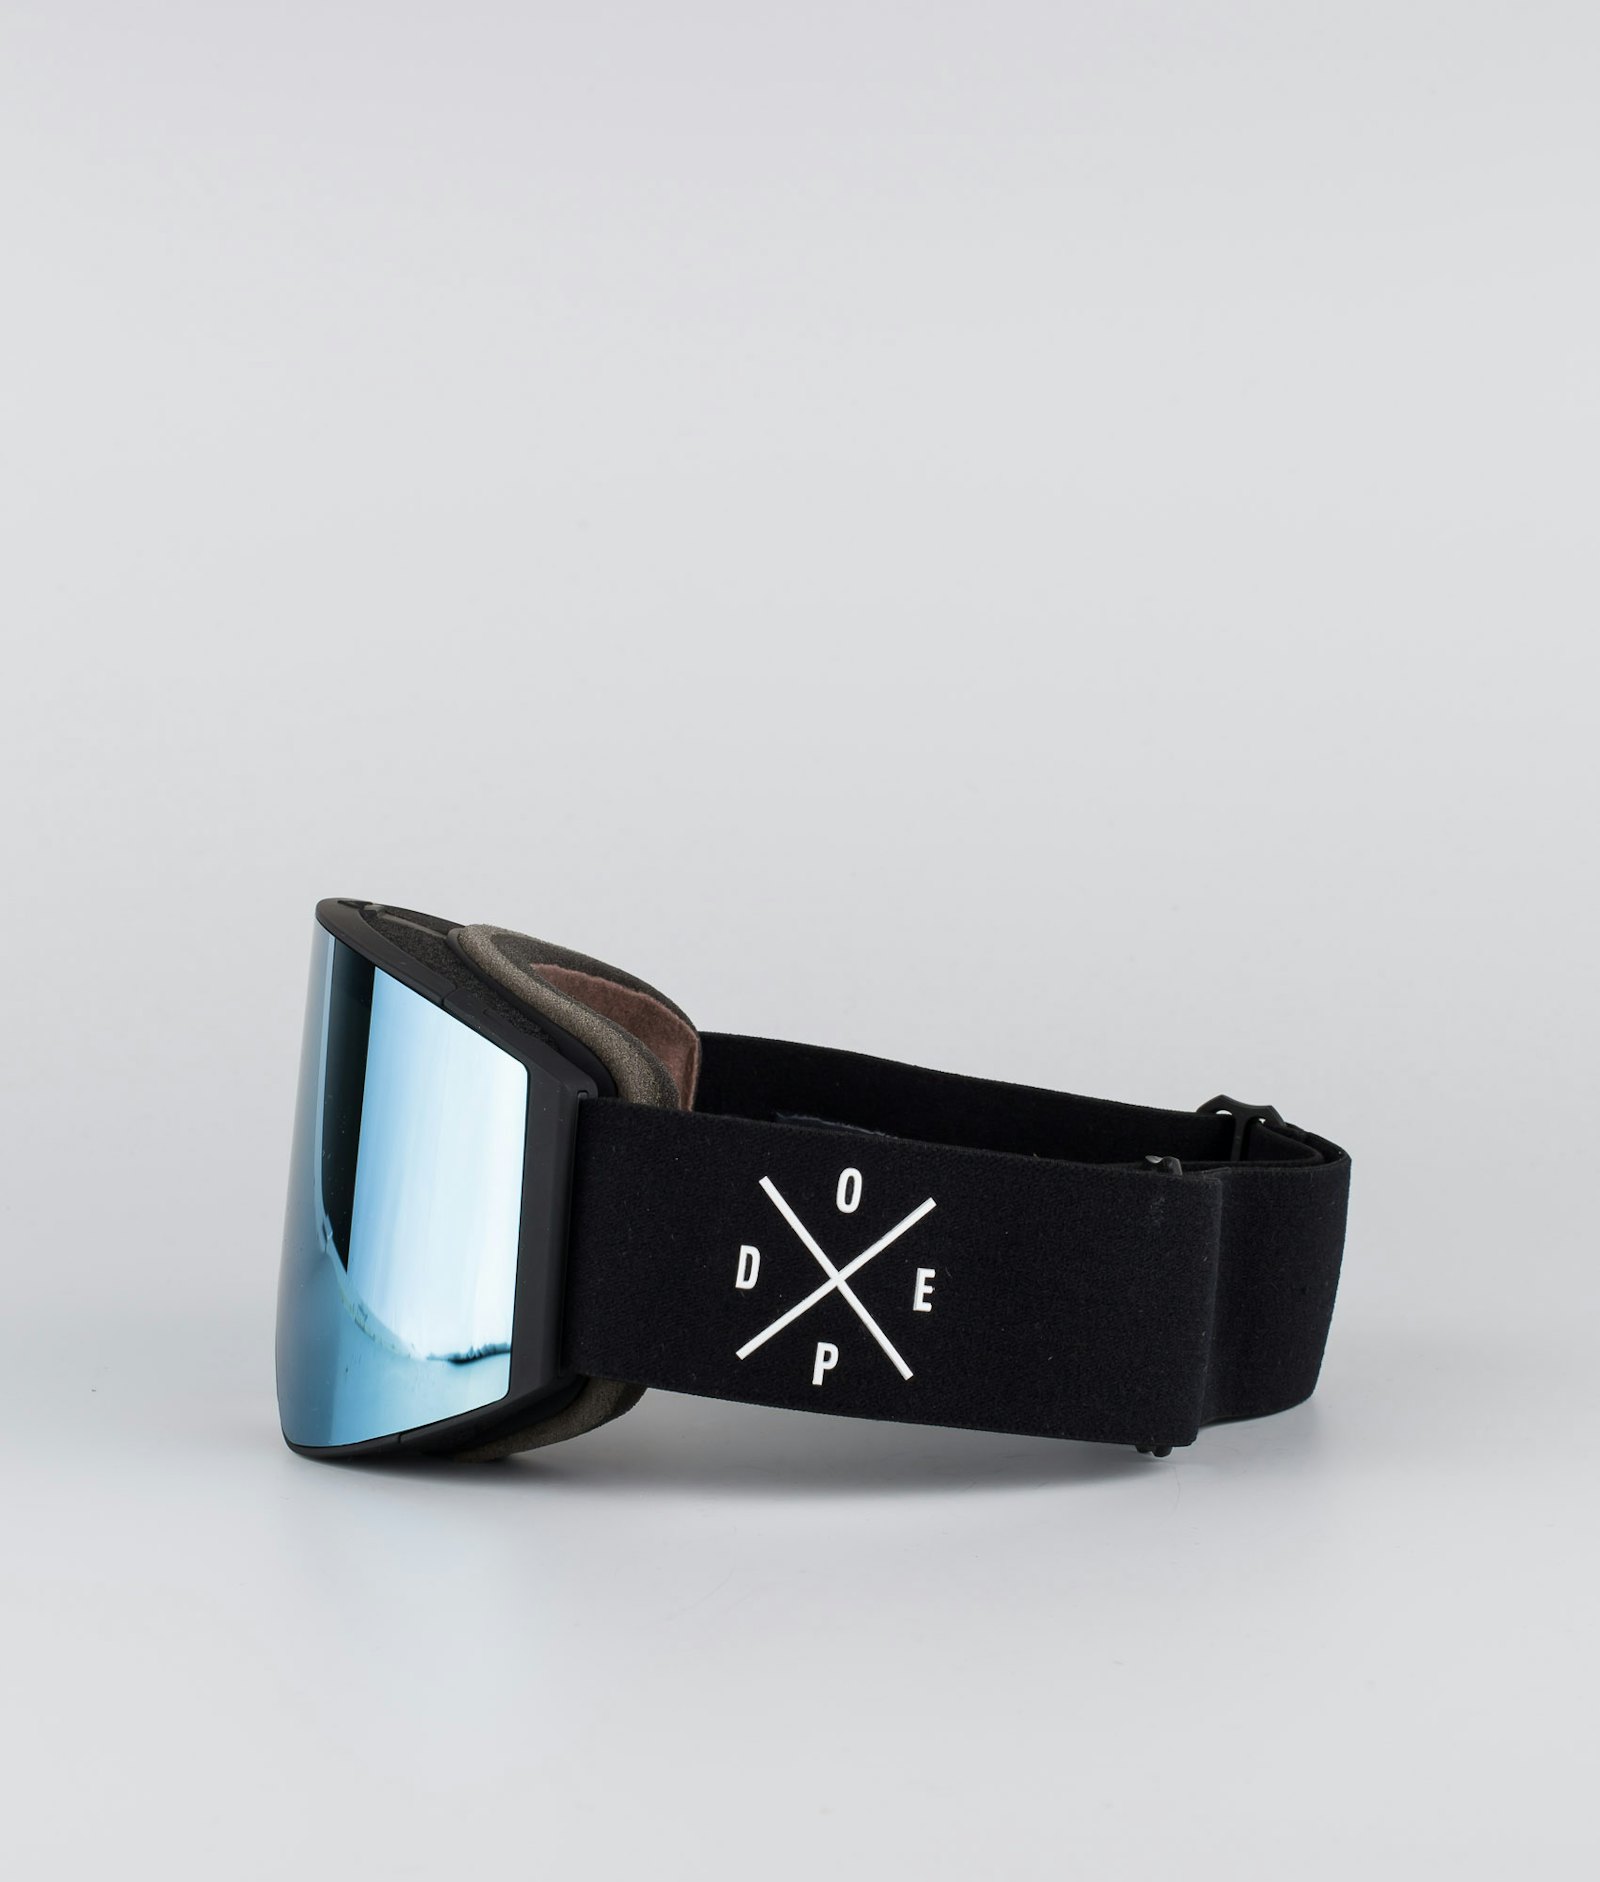 Sight 2020 Skibriller Black/Blue Mirror